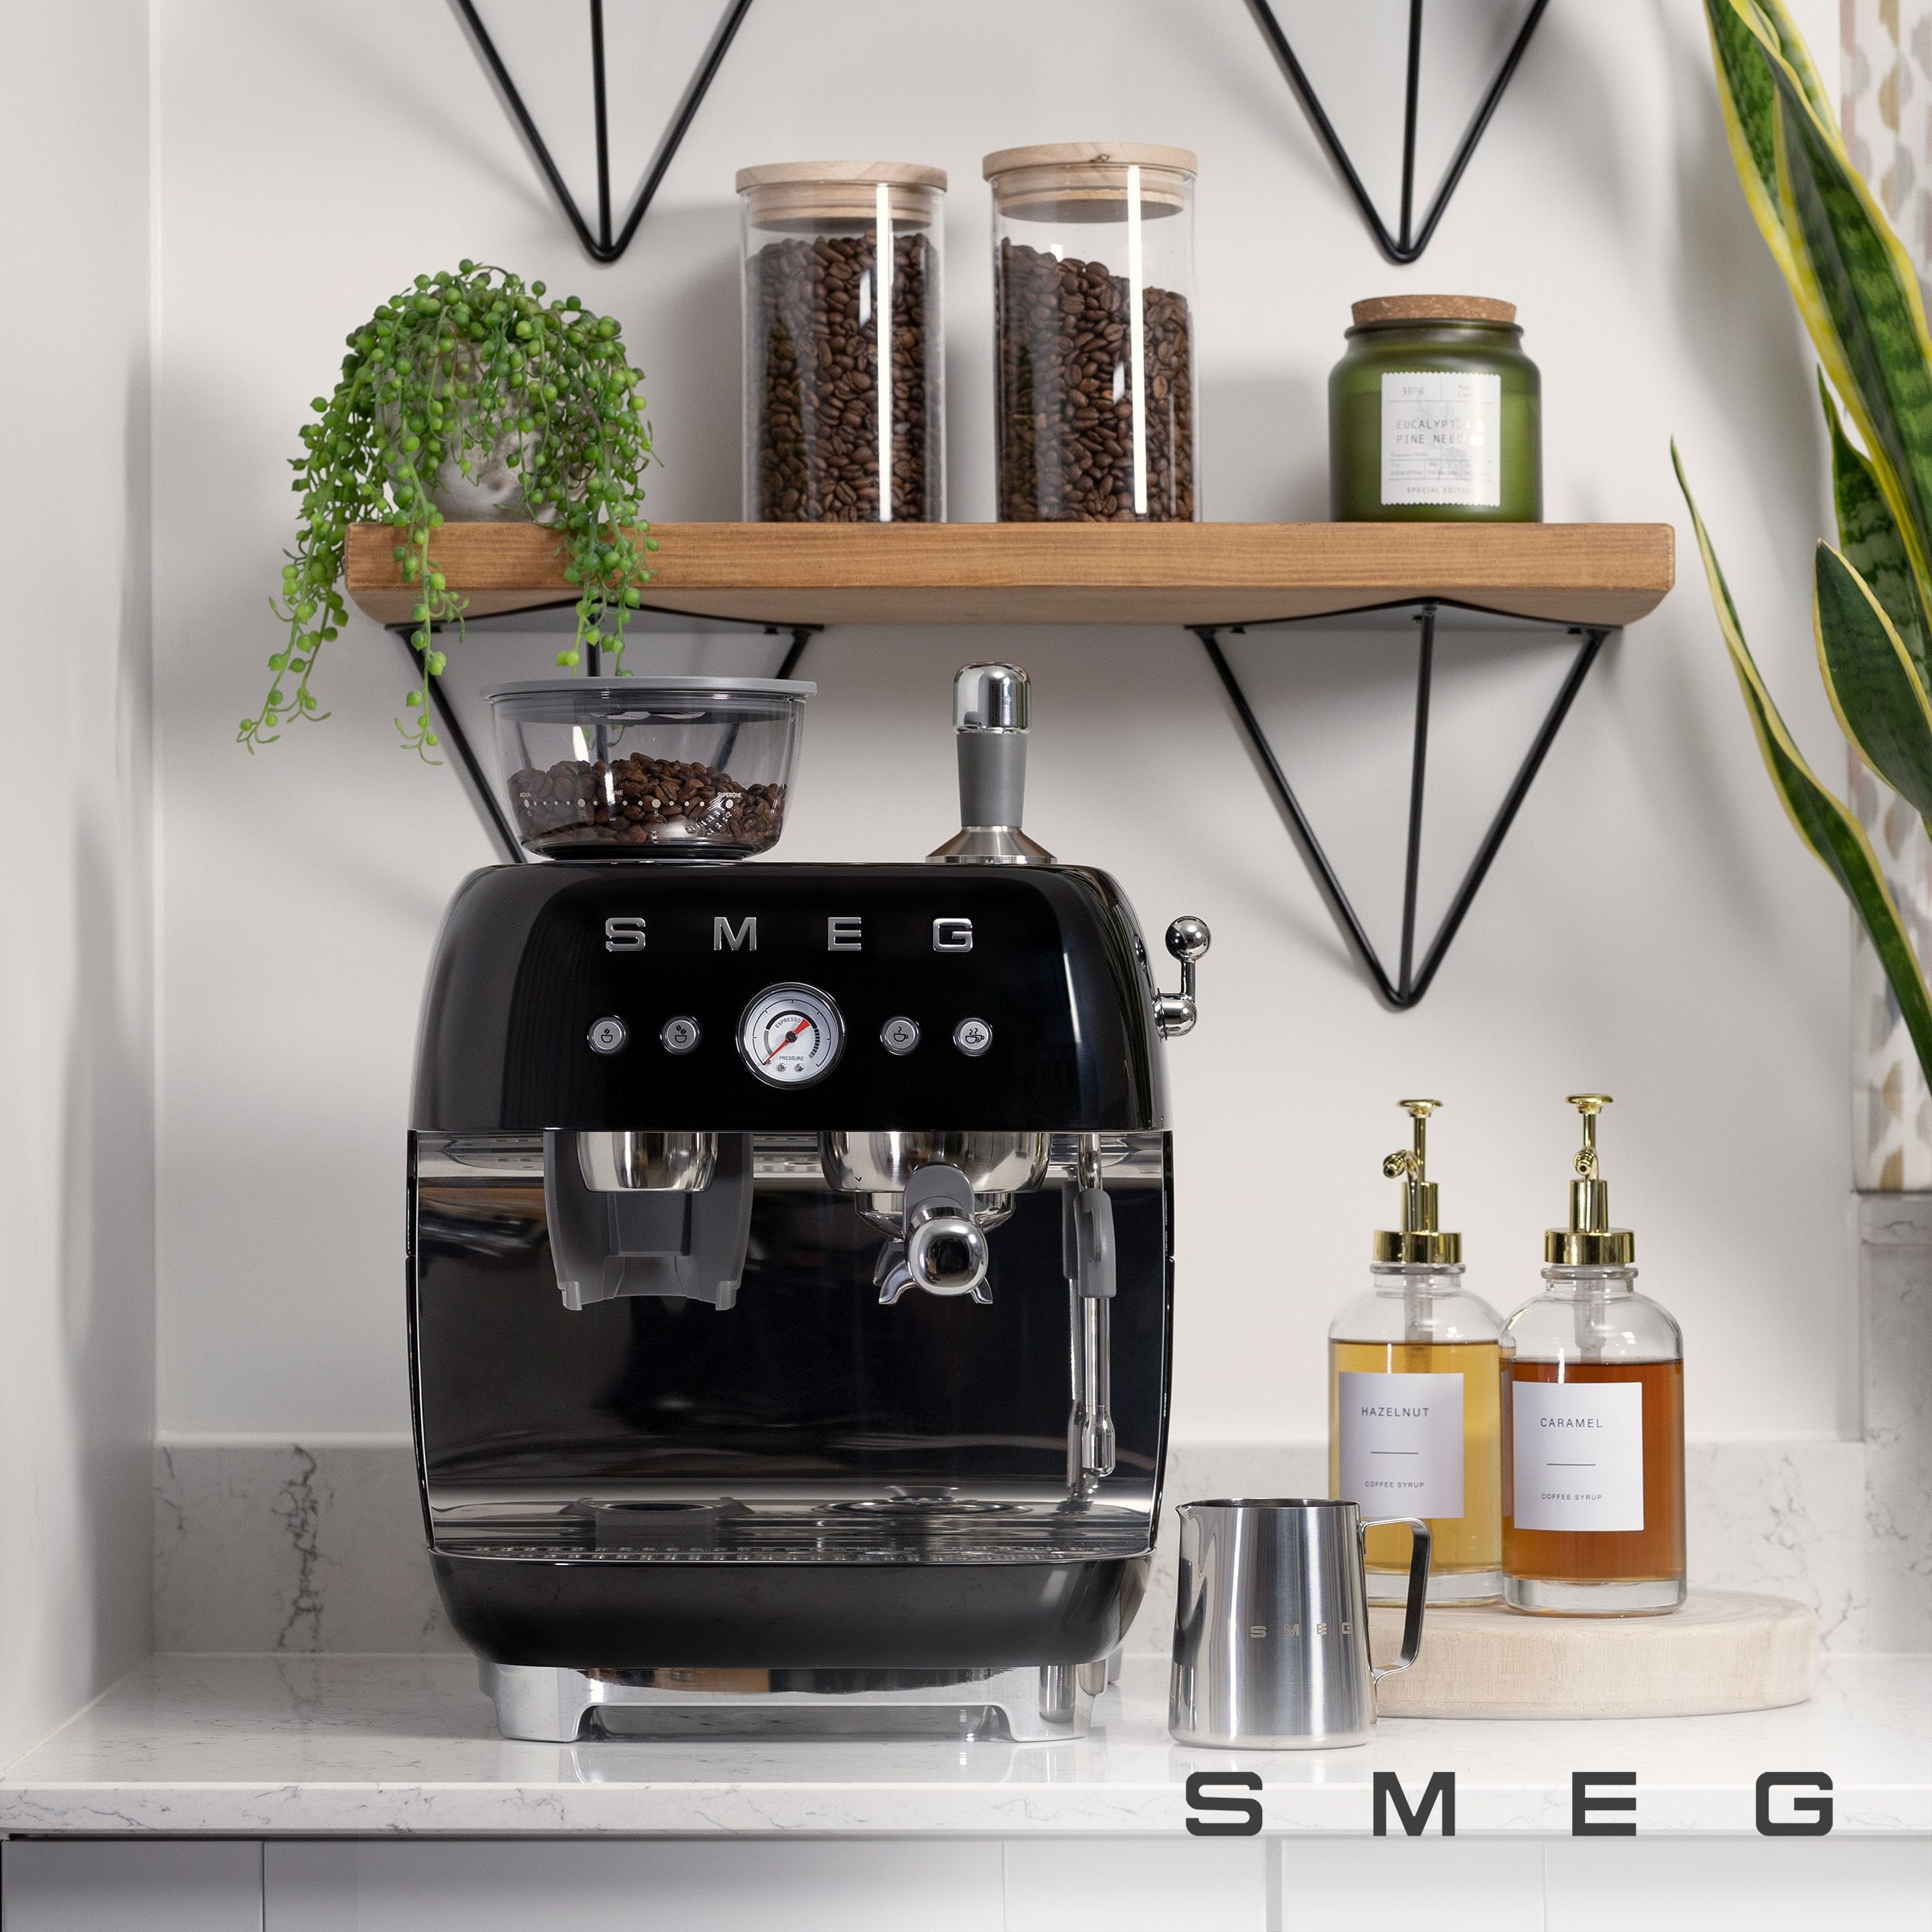 Smeg Coffee Machine on counter